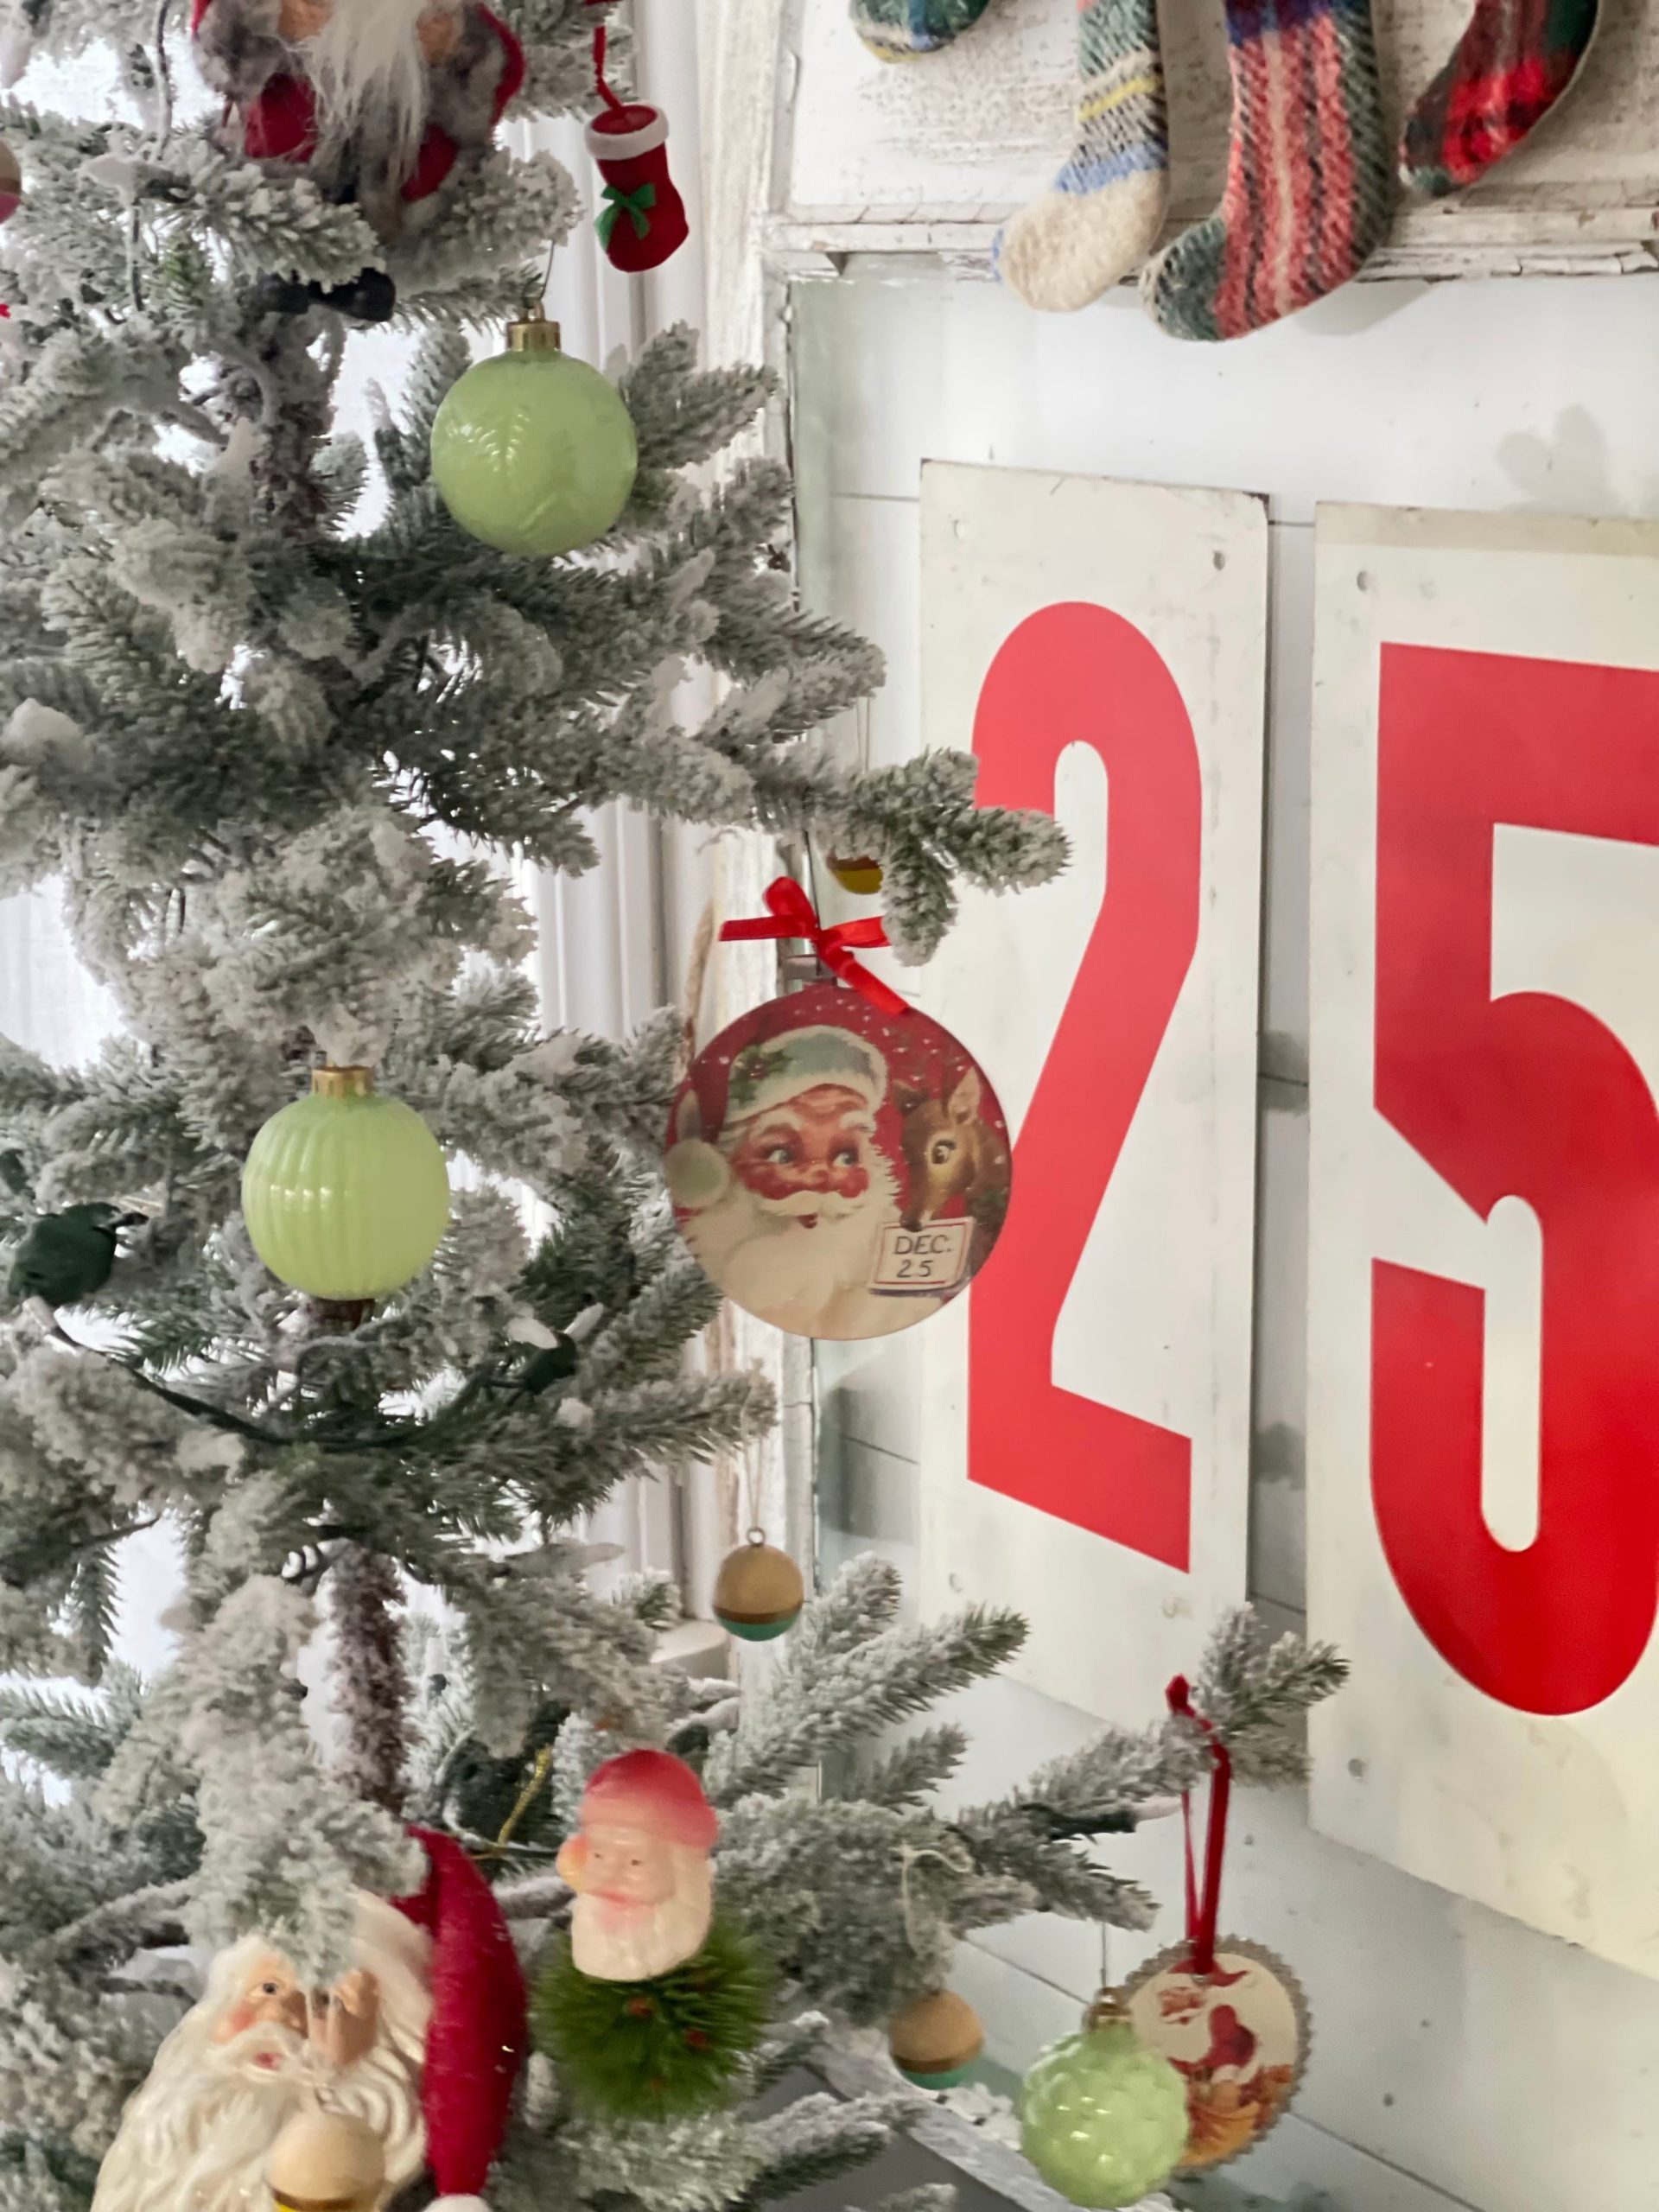 DIY Jadeite ornaments on tree with metal 25 Christmas sign vintage ornaments.